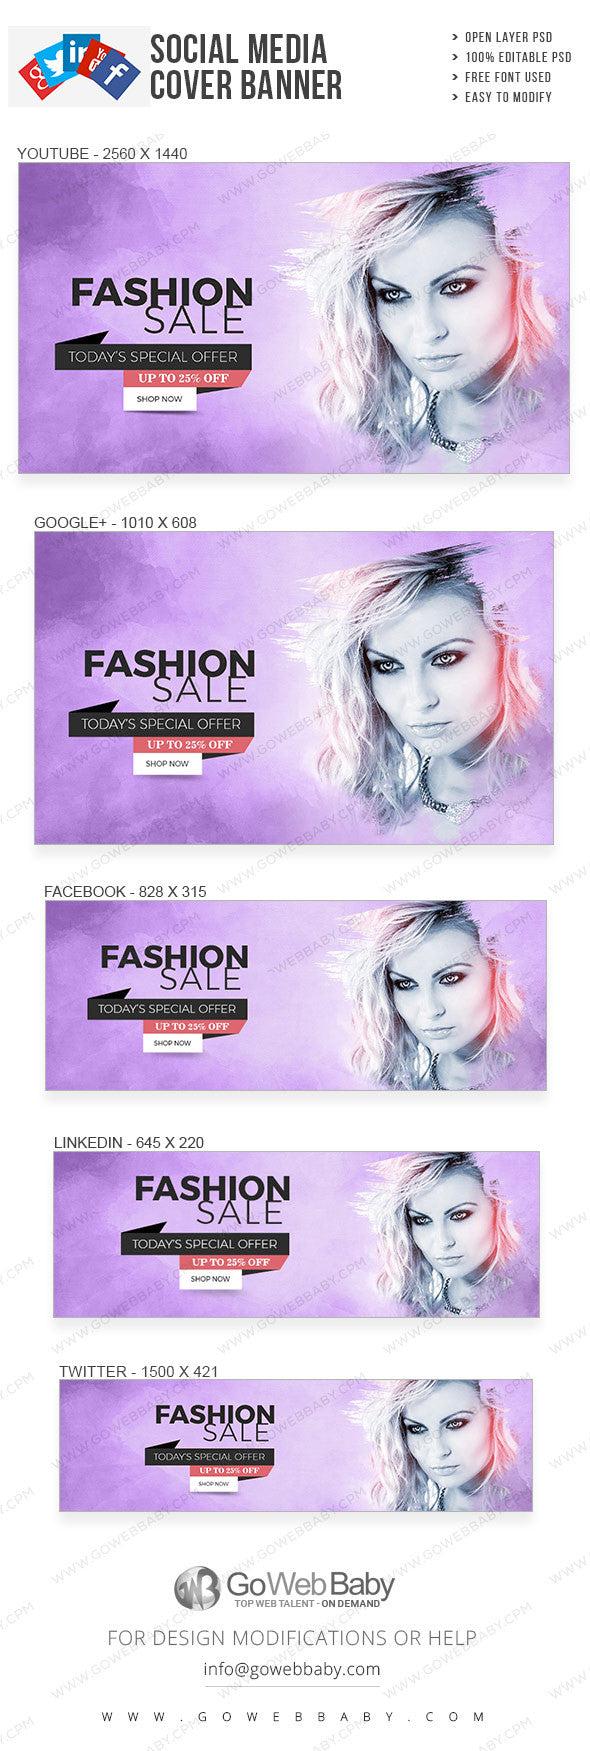 Social Media Cover Banner - Women's fashion for website marketing - GoWebBaby.Com